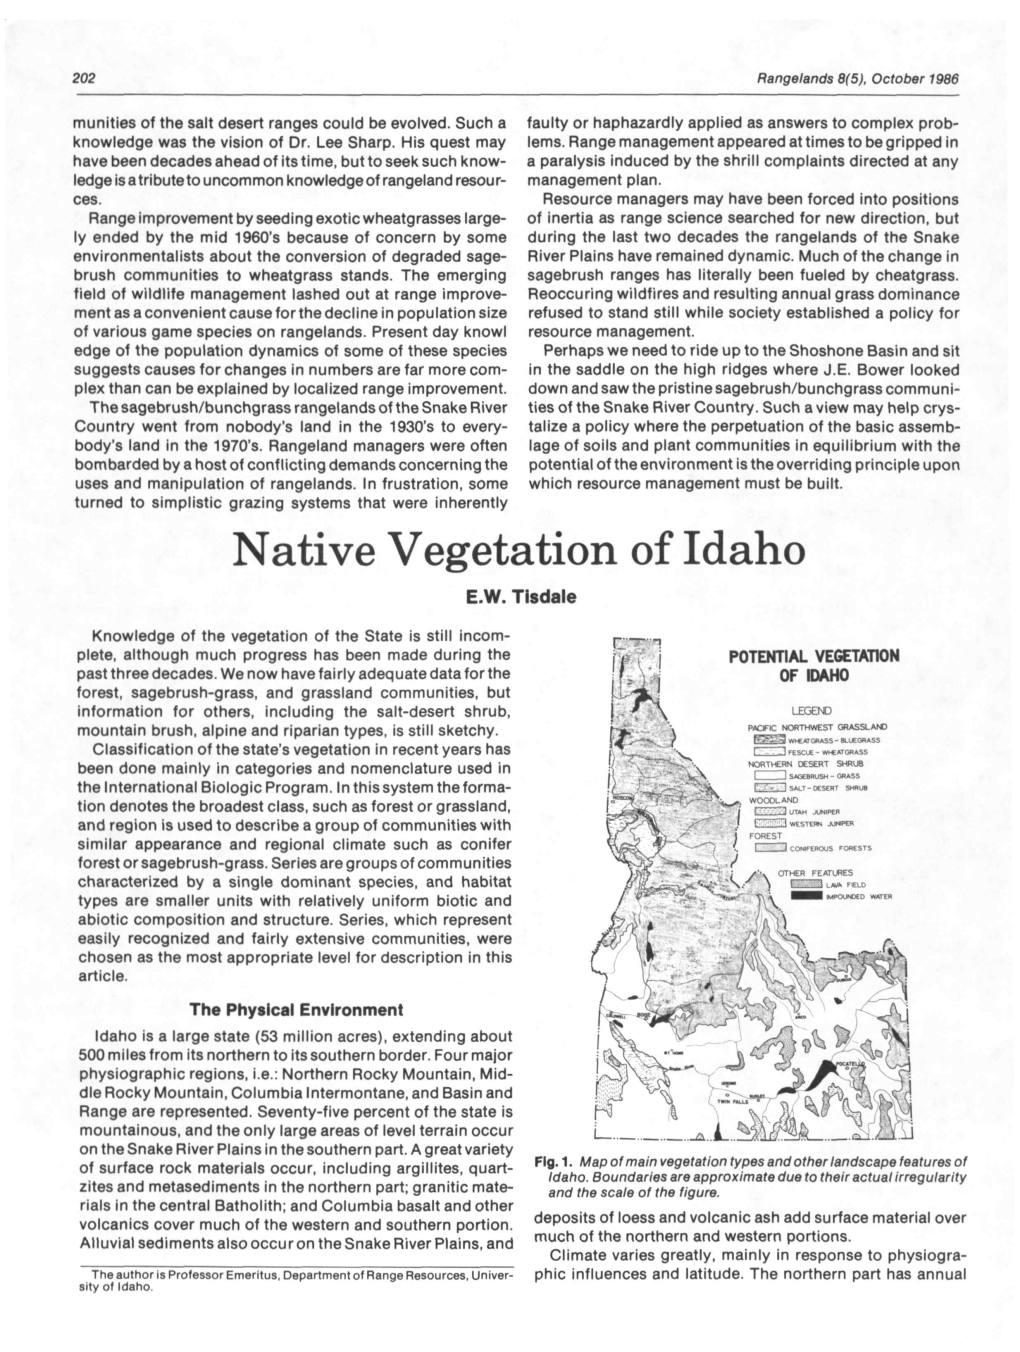 Native Vegetation of Idaho E.W